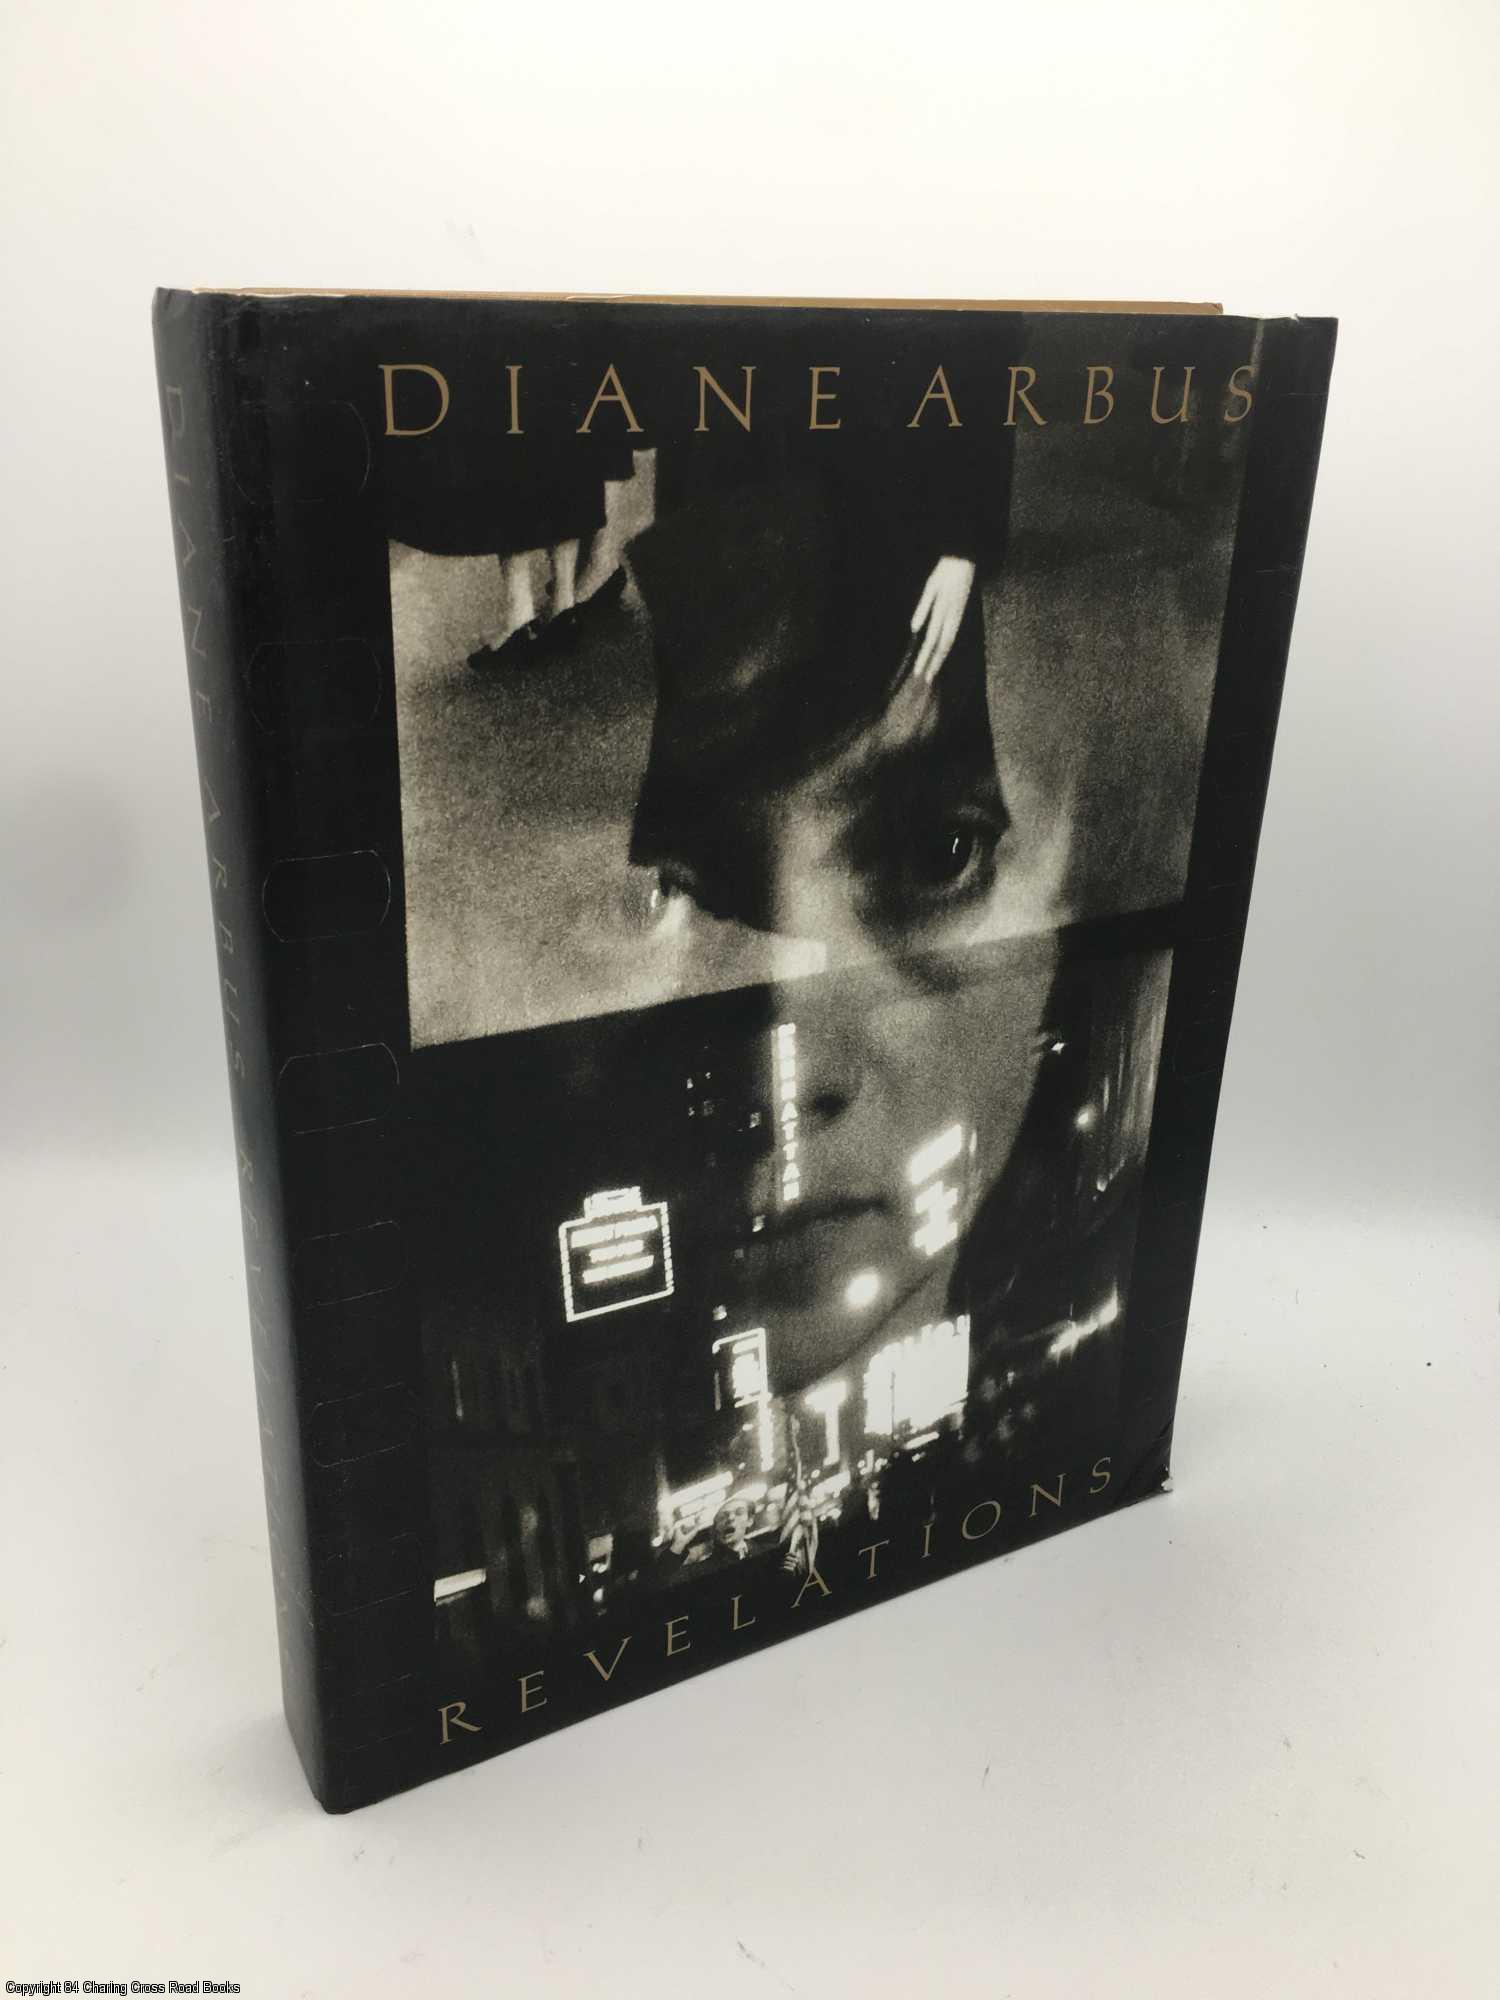 Diane Arbus: Revelations by Diane Arbus on 84 Charing Cross Rare Books